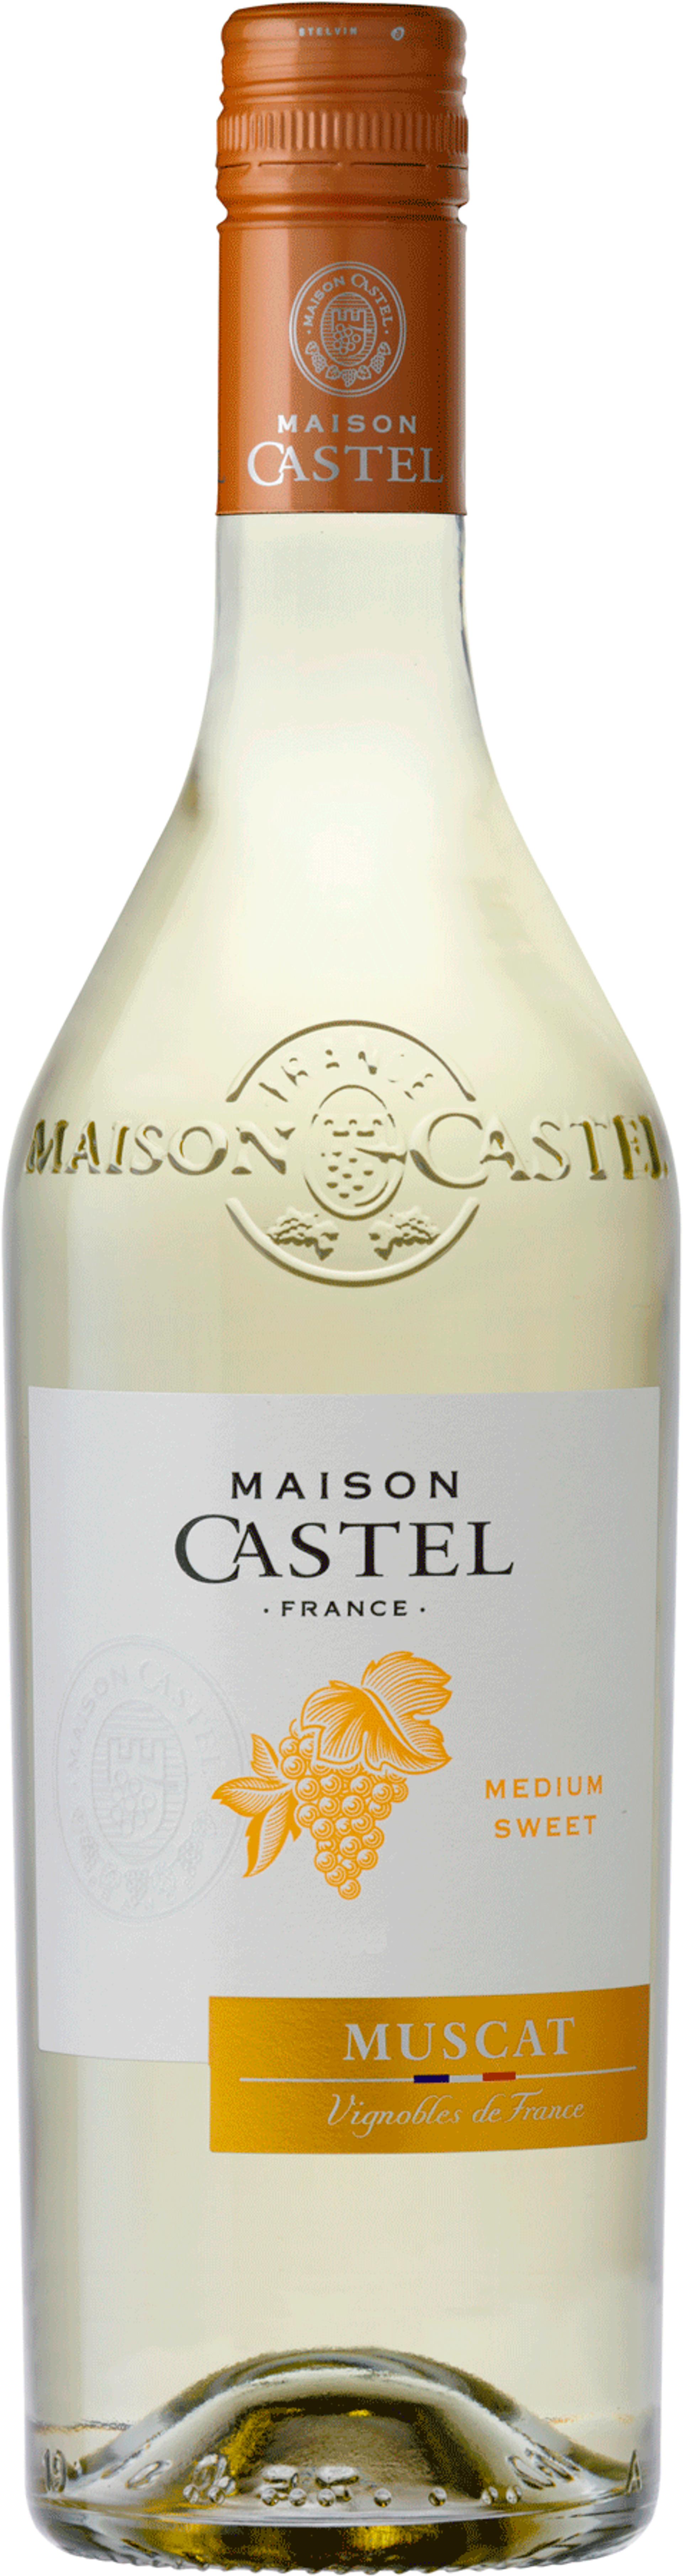 Maison Castel Medium Sweet Muscat